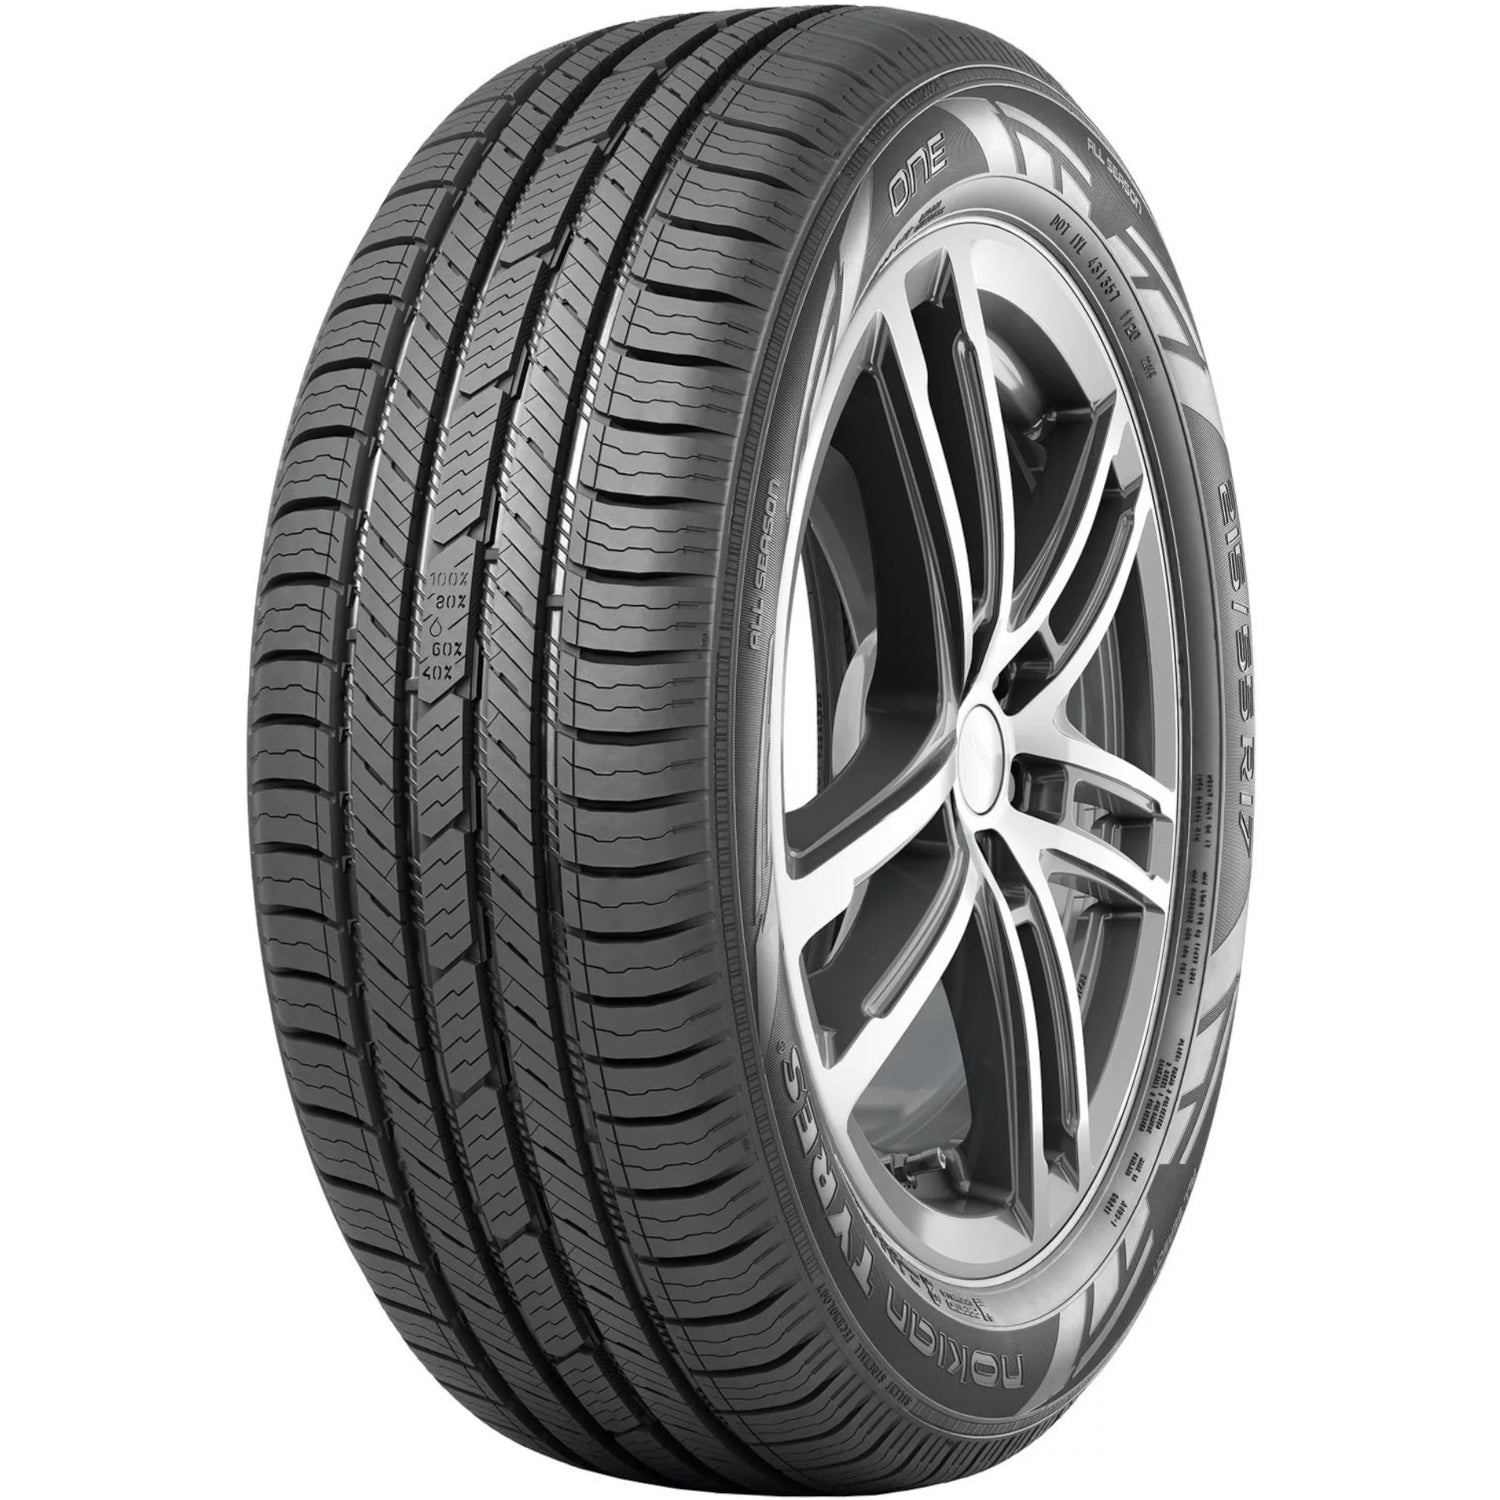 NOKIAN ONE 235/55R20 (30.2X9.3R 20) Tires